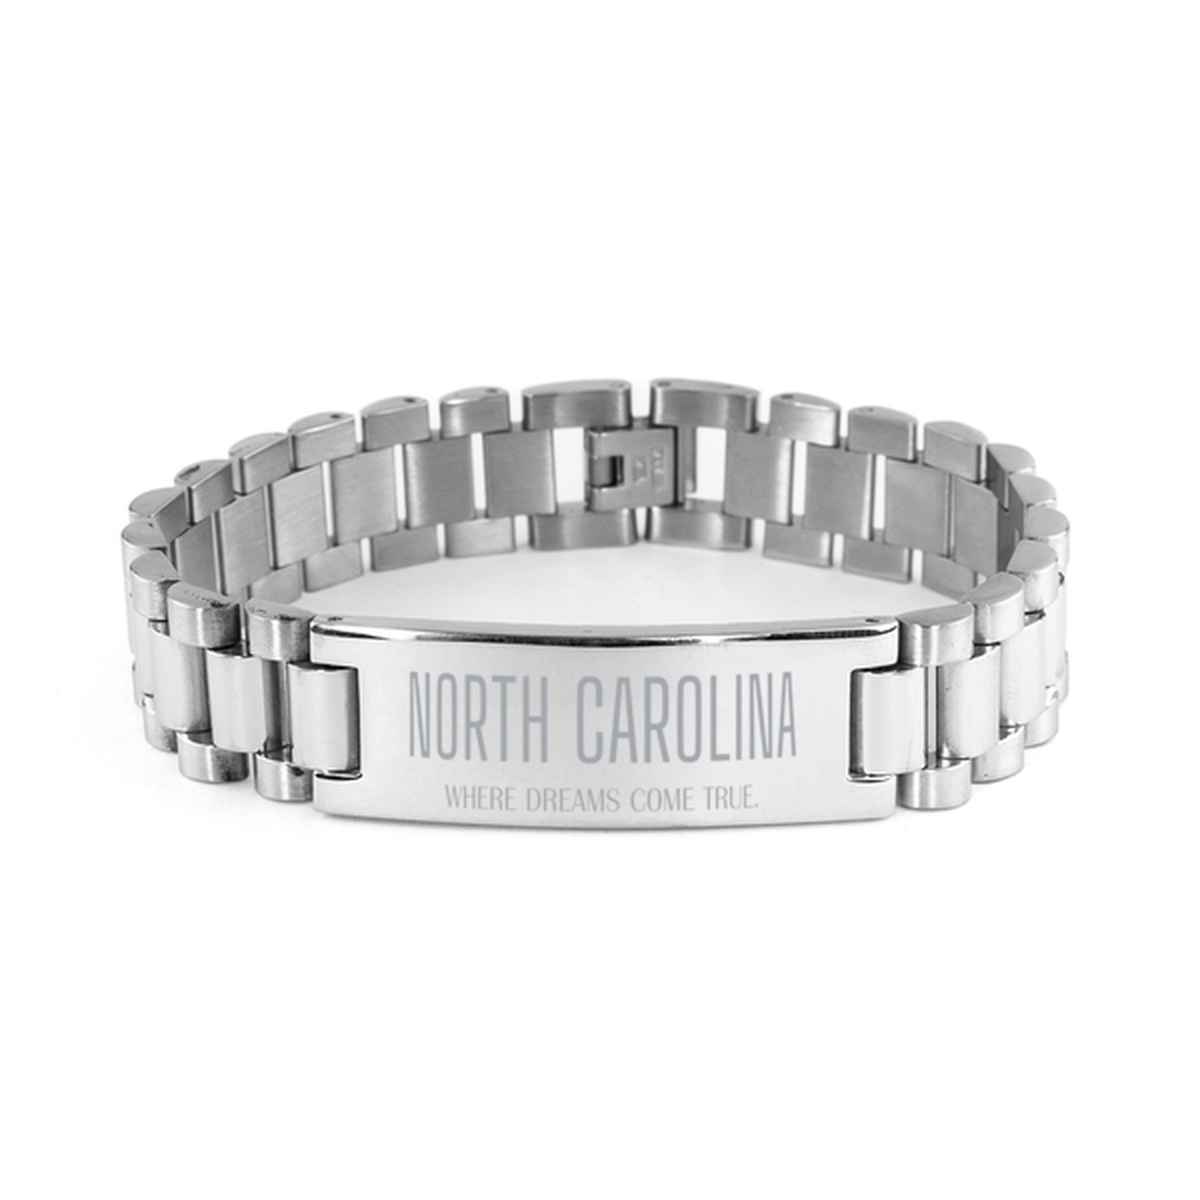 Love North Carolina State Ladder Stainless Steel Bracelet, North Carolina Where dreams come true, Birthday Inspirational Gifts For North Carolina Men, Women, Friends